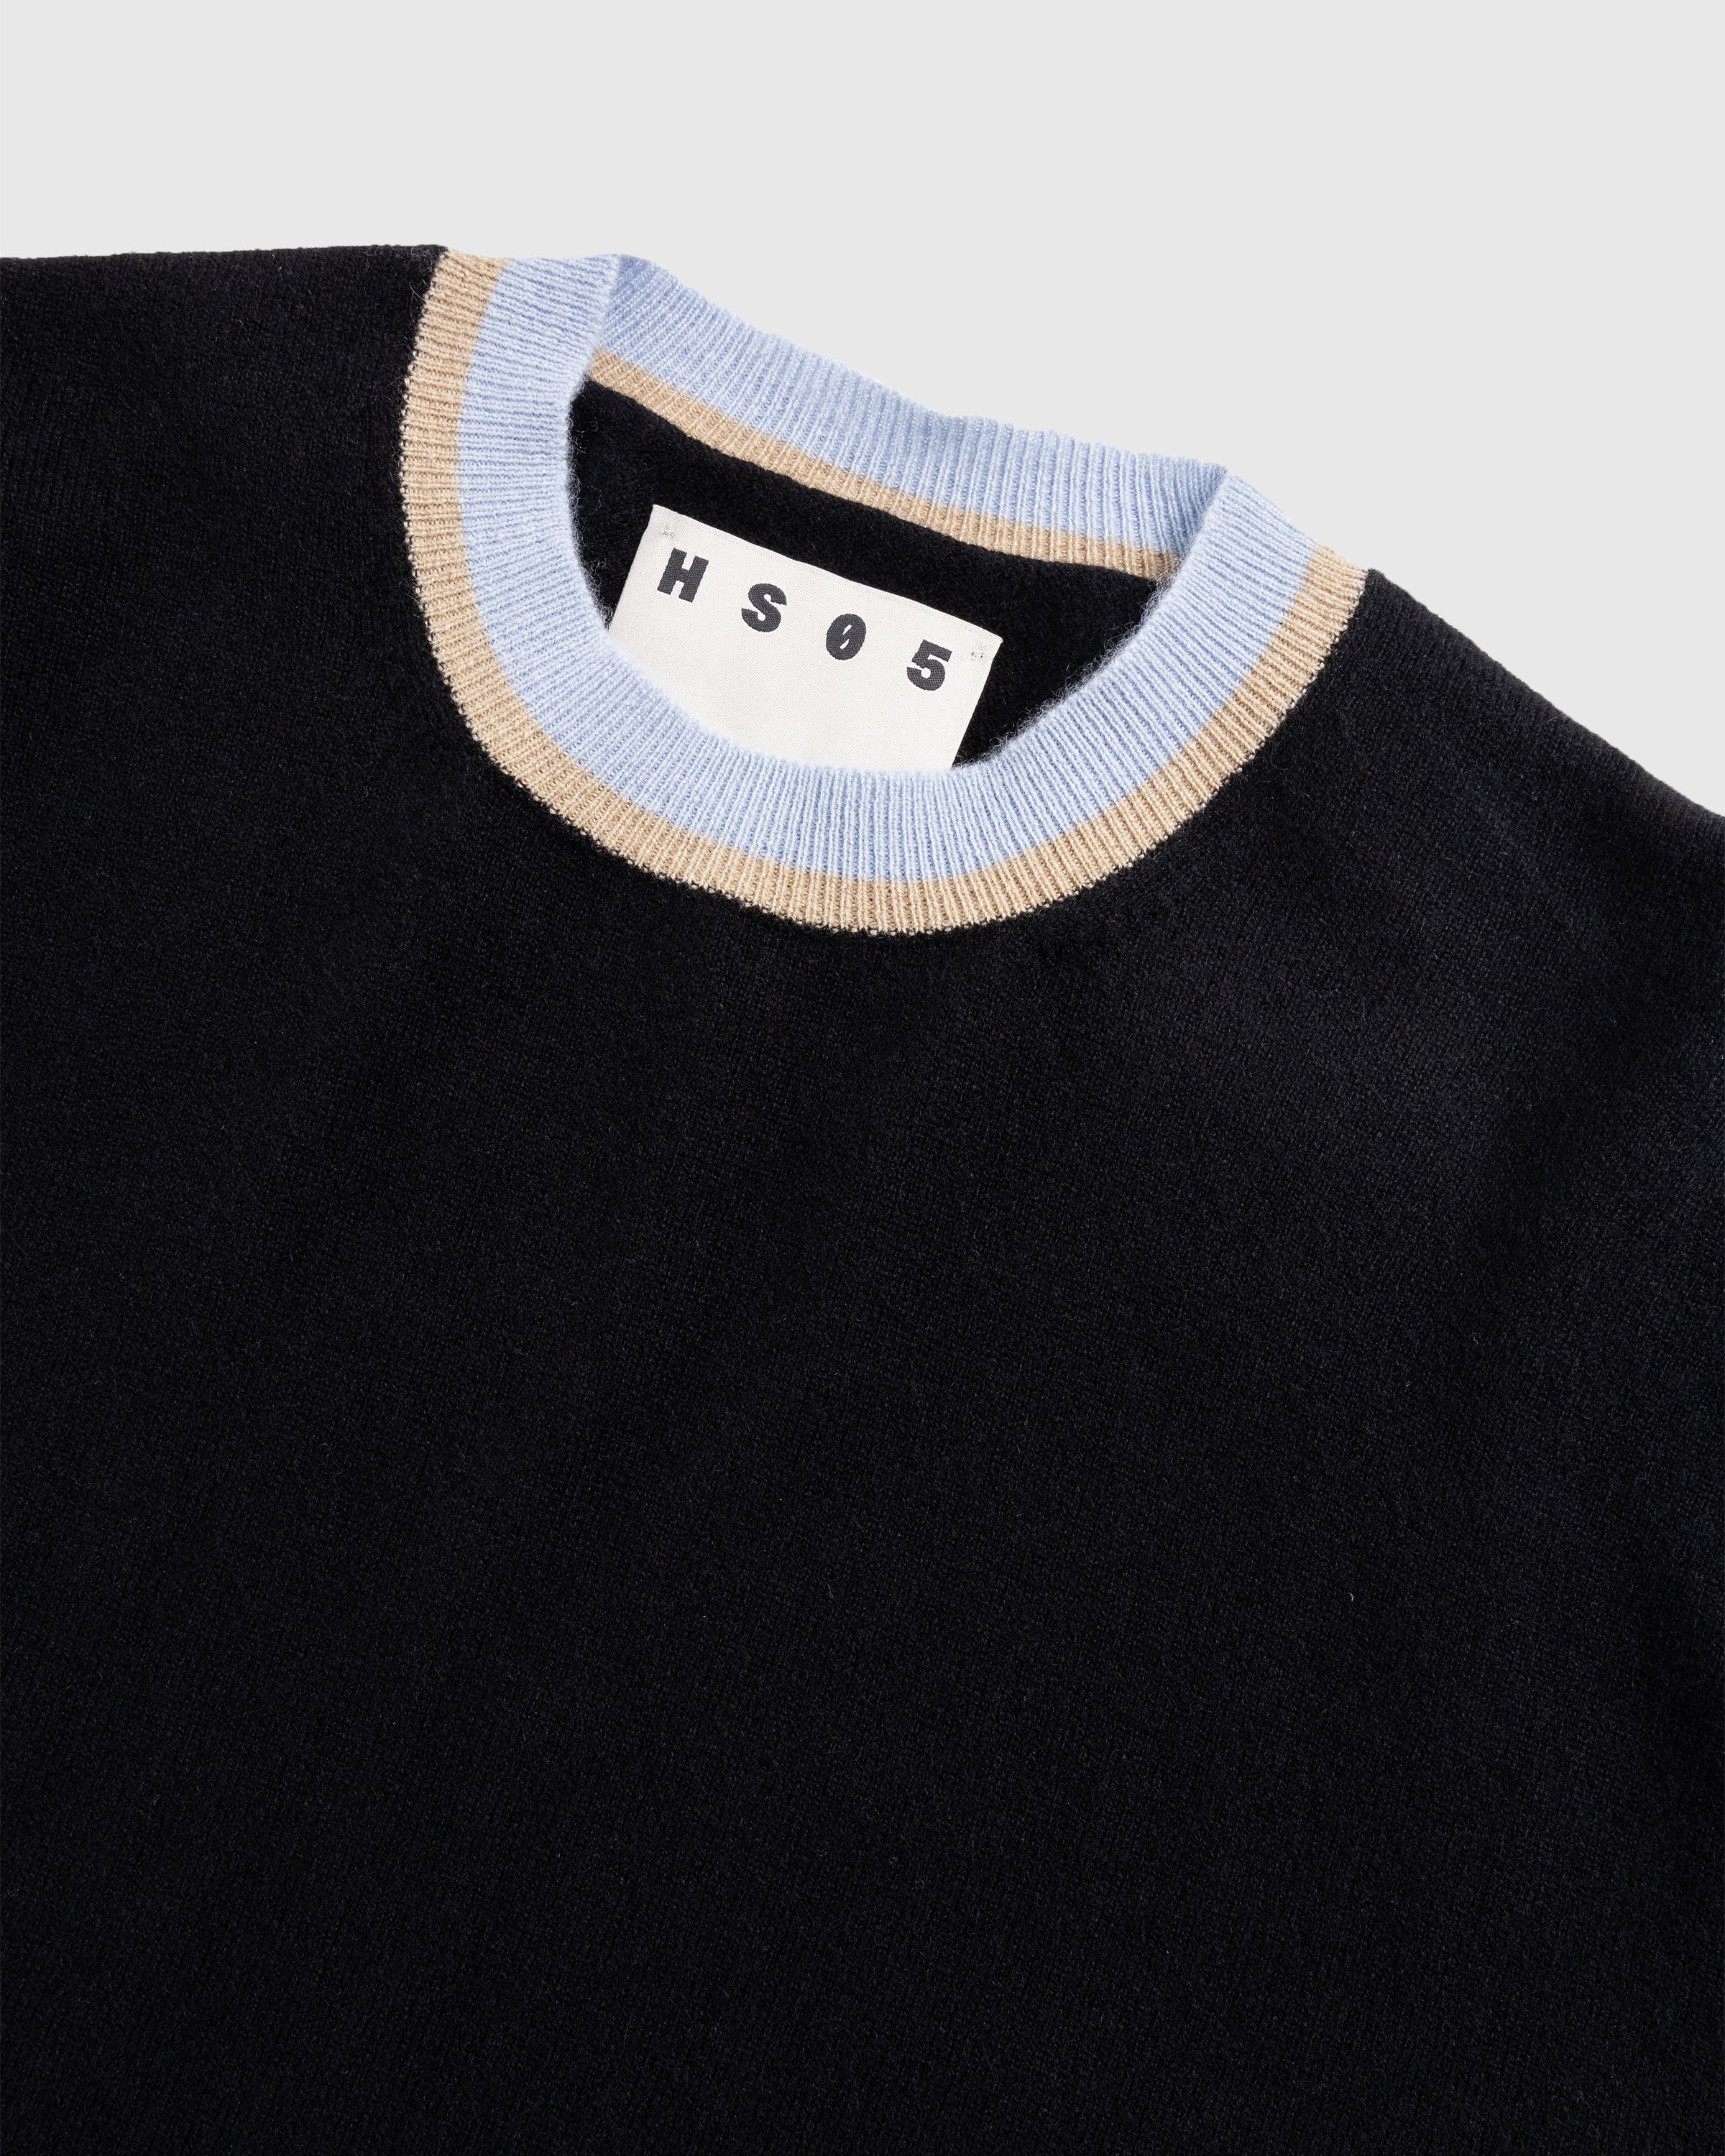 Highsnobiety HS05 - Cashmere Crew Sweater Black - Clothing - Black - Image 6